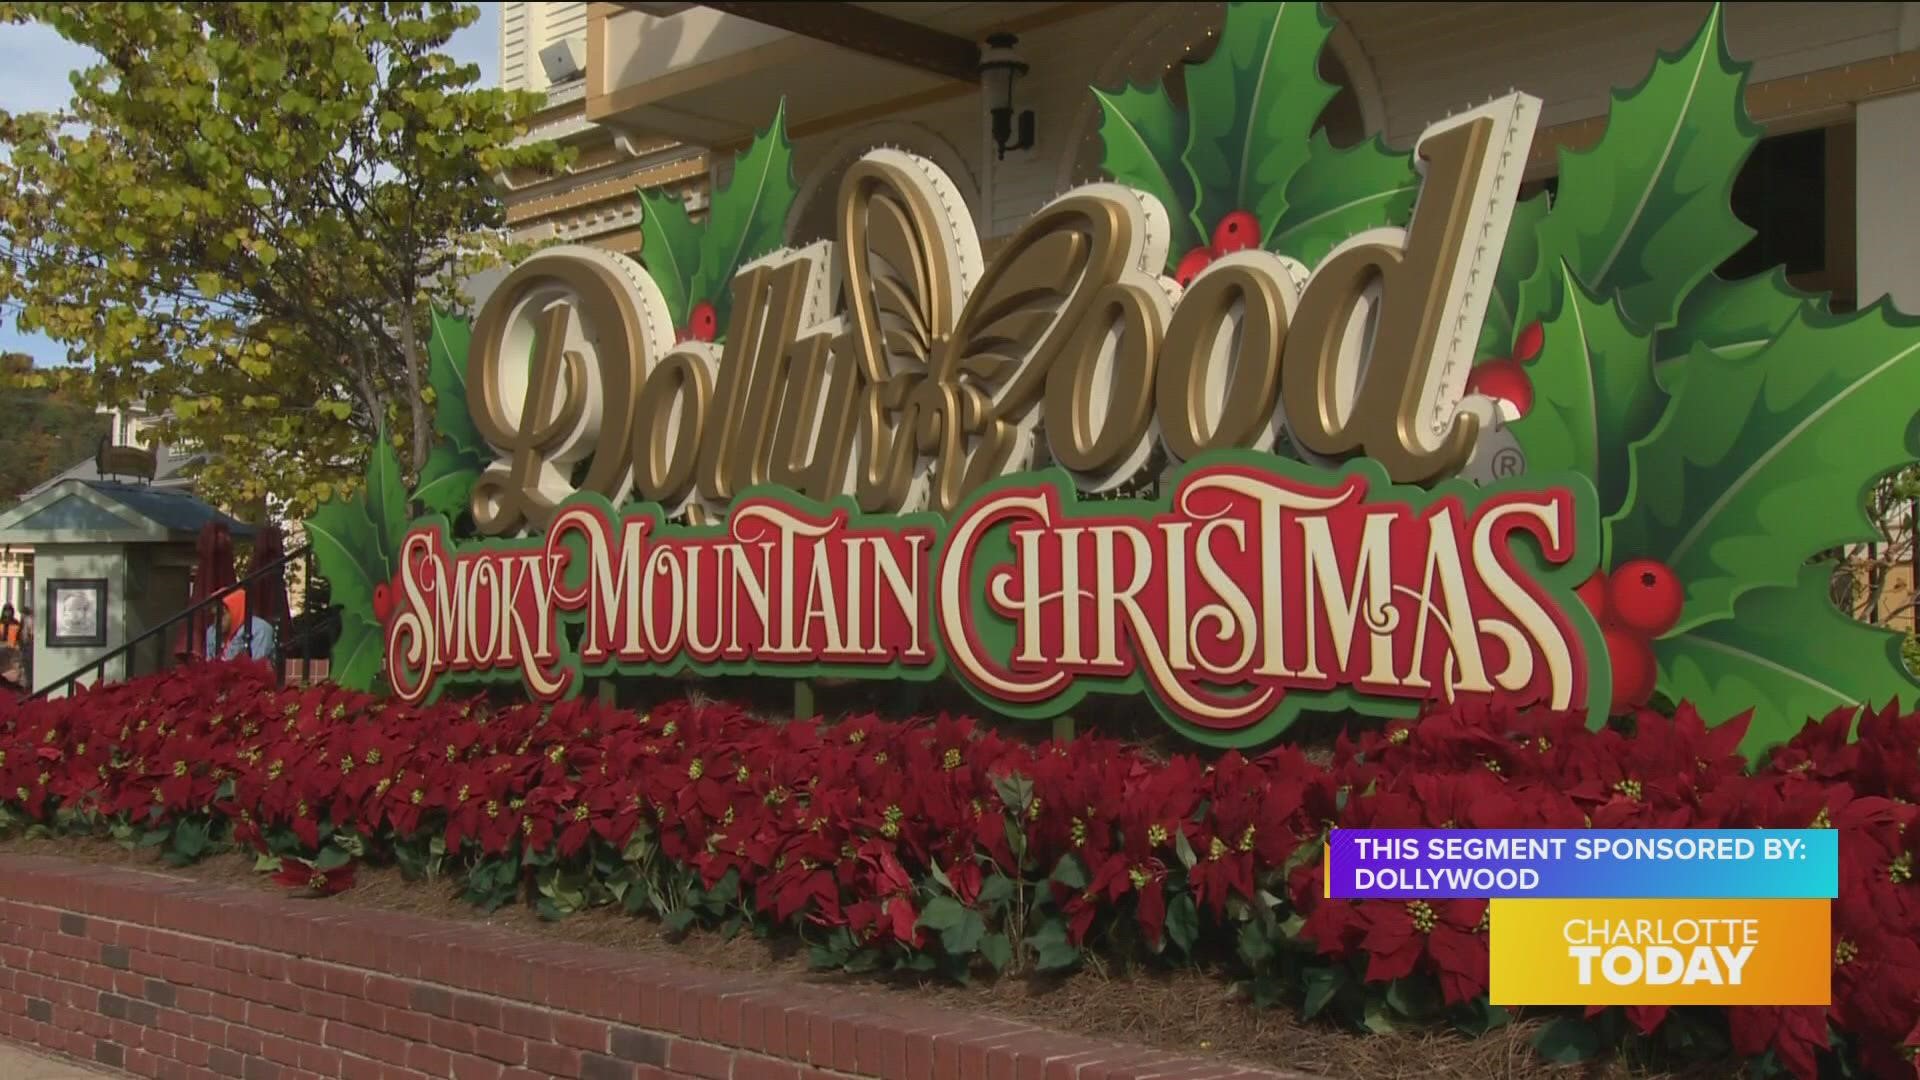 Dollywood’s Smoky Mountain Christmas runs through Jan. 1